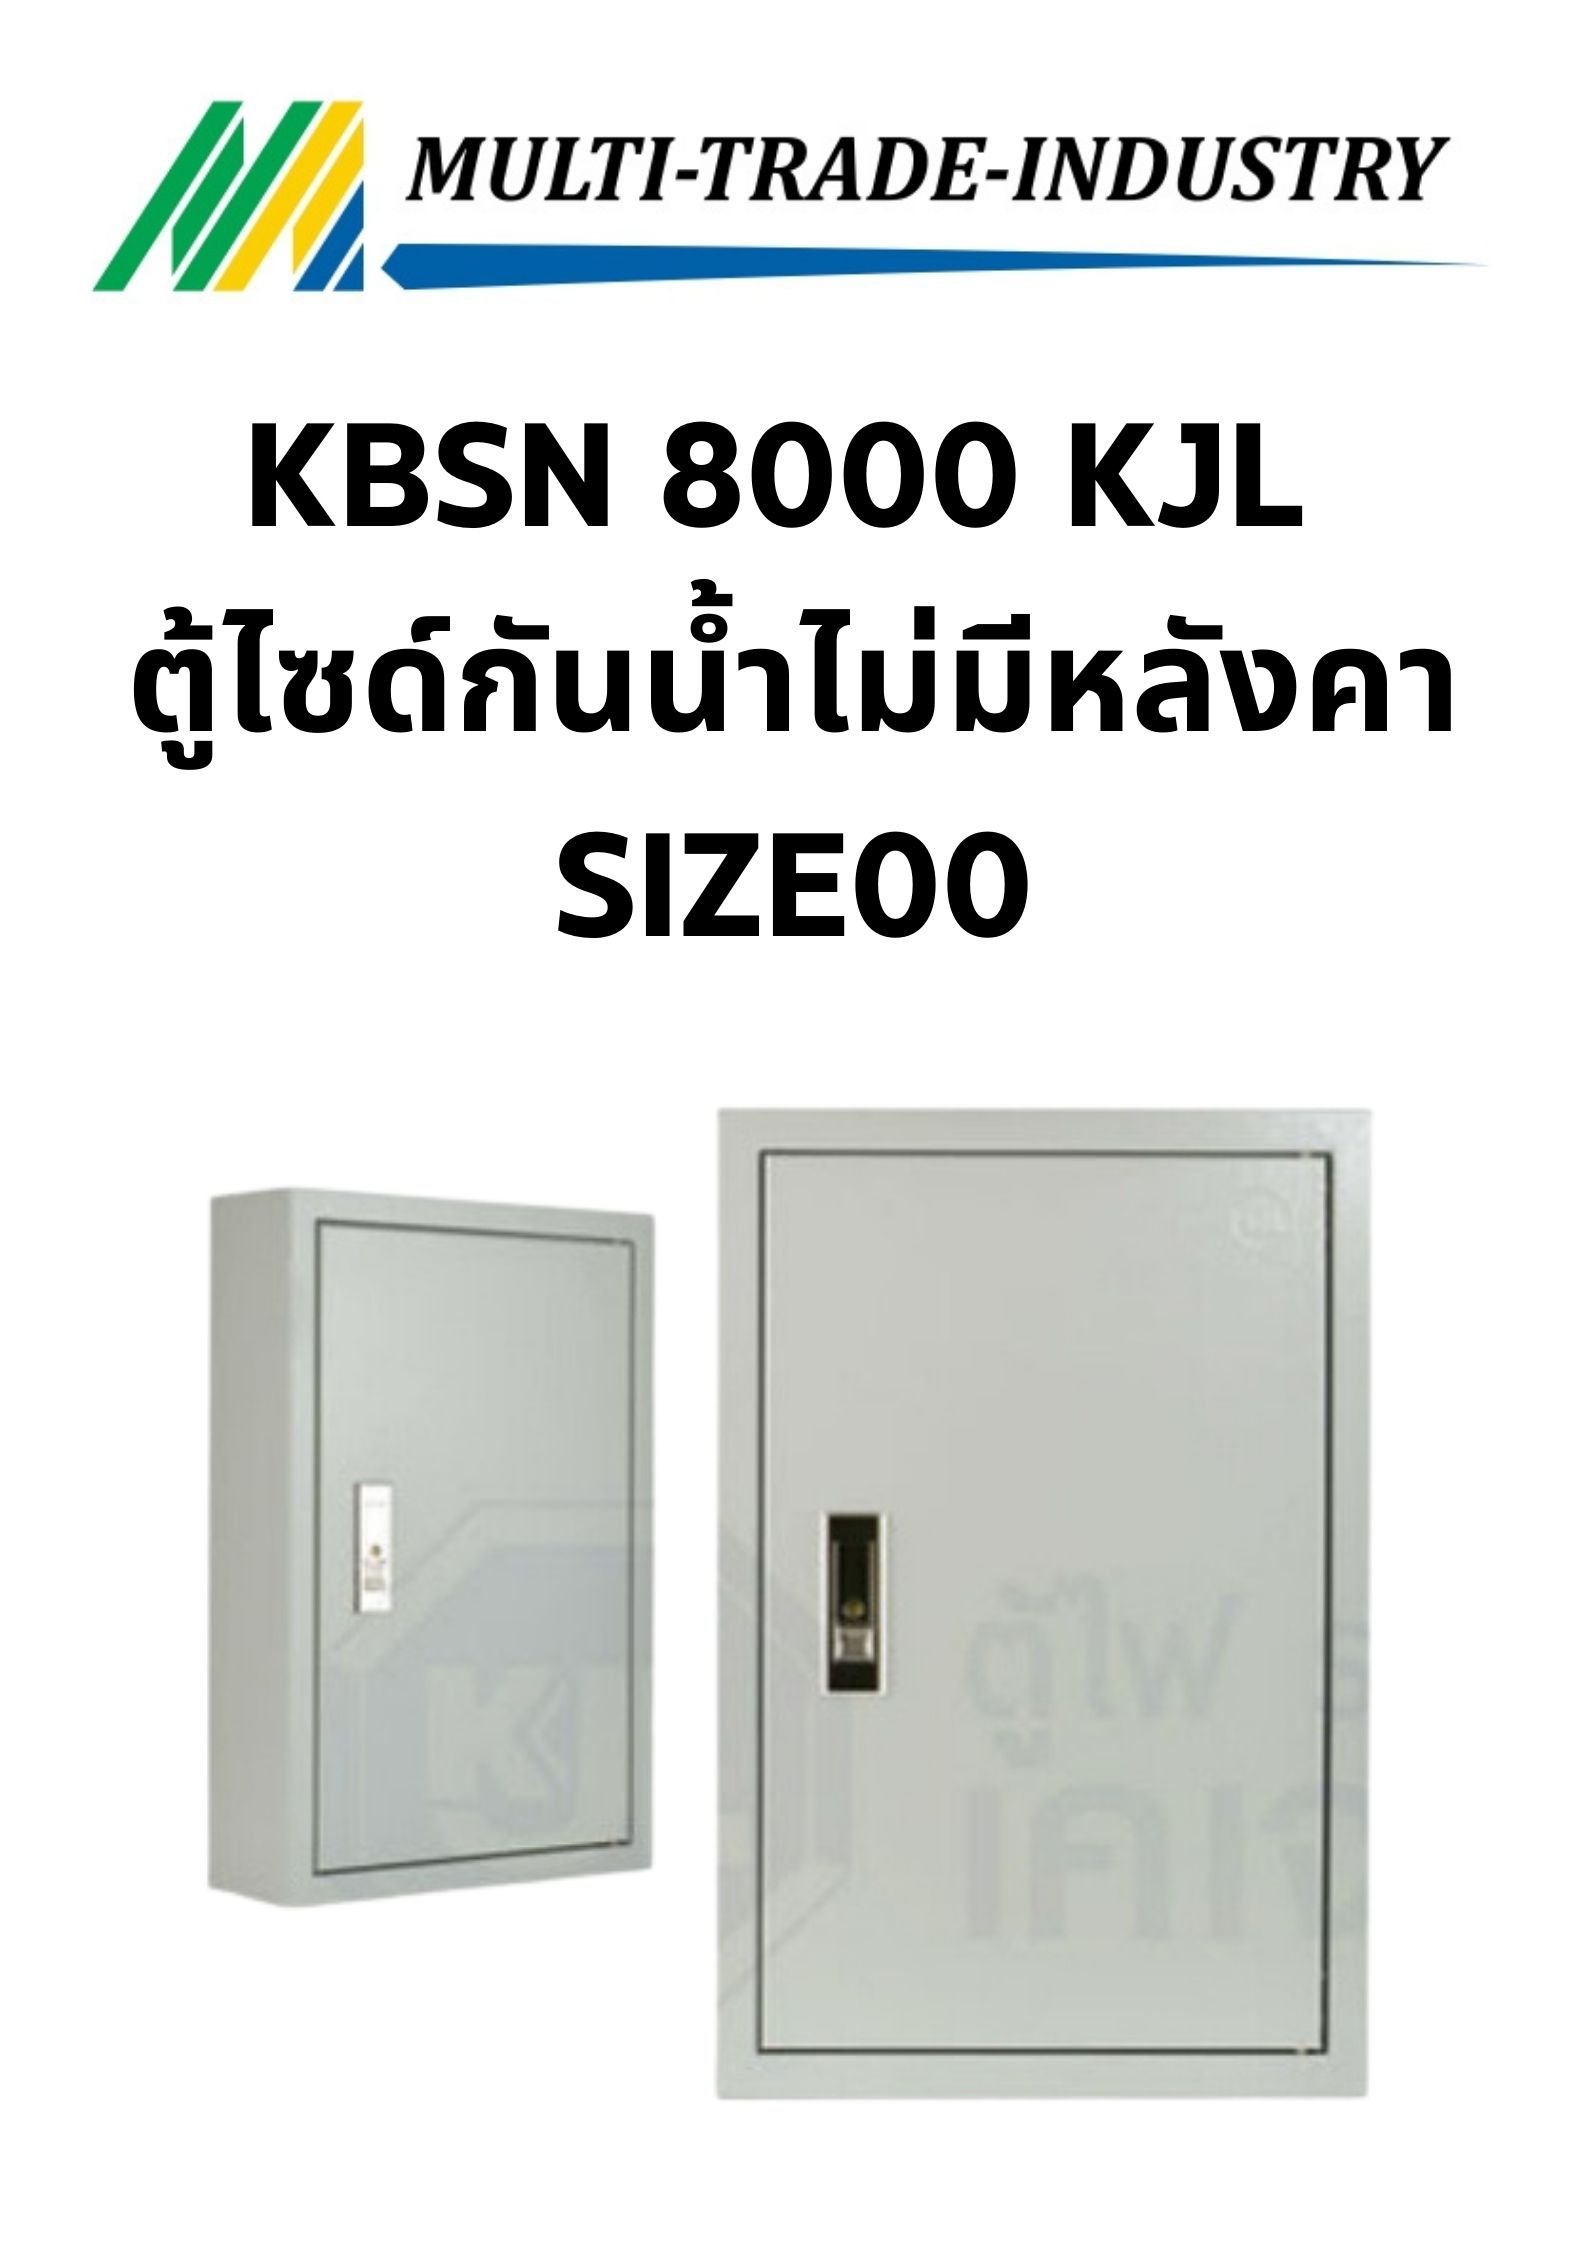 KBSN 8000 KJL ตู้ไซด์กันน้ำไม่มีหลังคา SIZE00 200x300x150